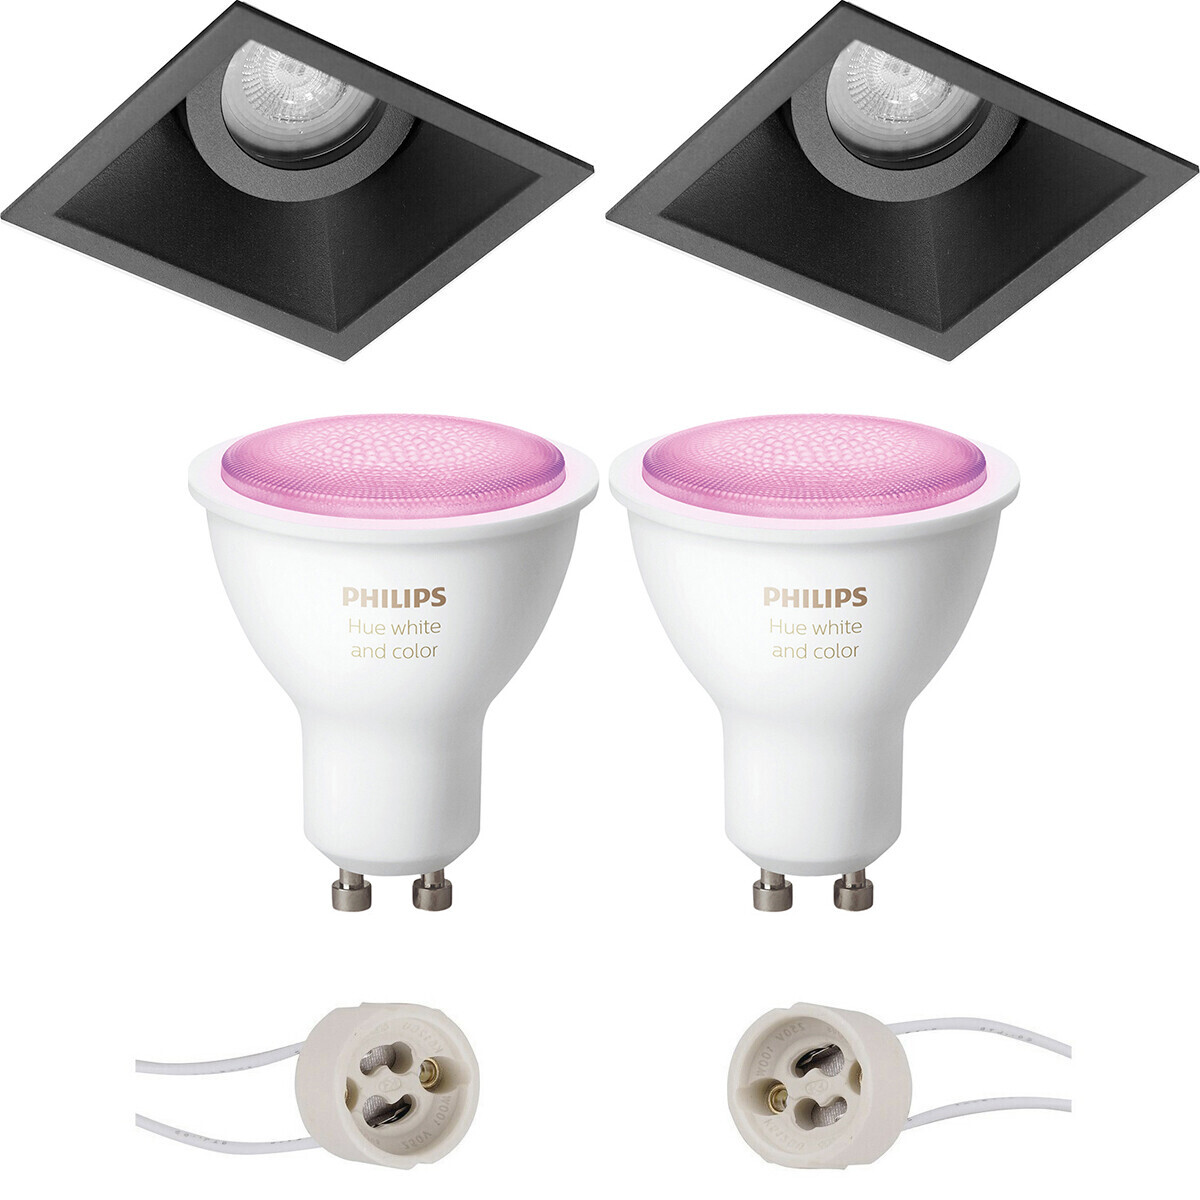 BES LED Pragmi Zano Pro - Inbouw Vierkant - Mat Zwart - Kantelbaar - 93mm - Philips Hue - LED Spot Set GU10 - White and Color Ambiance - Bluetooth